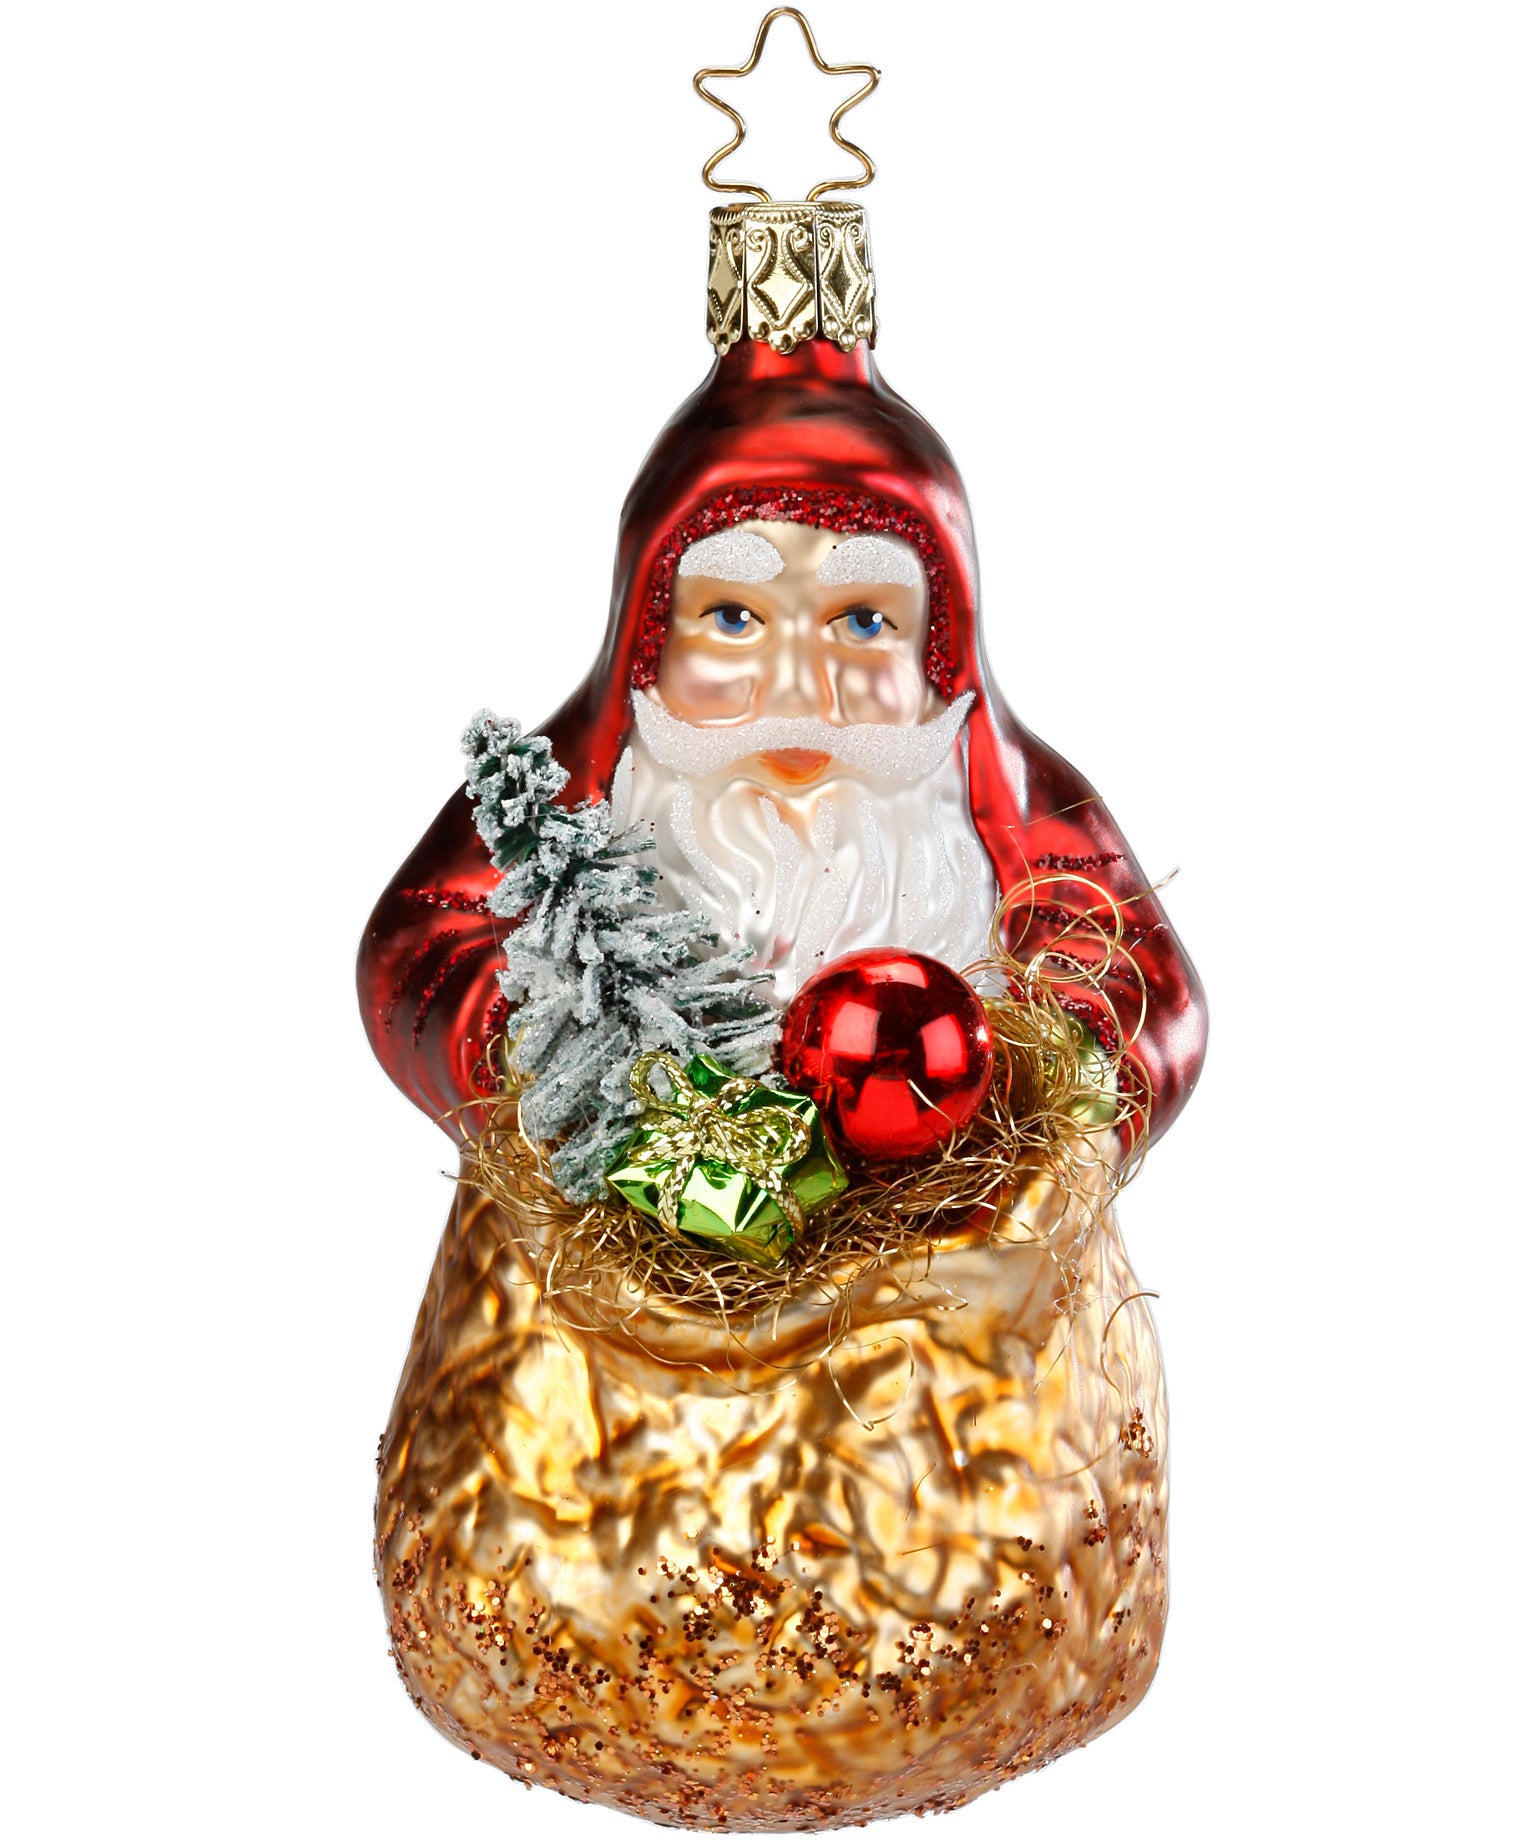 Nik's Knapsack Ornament - Santa with Sack Ornament by Inge Glass